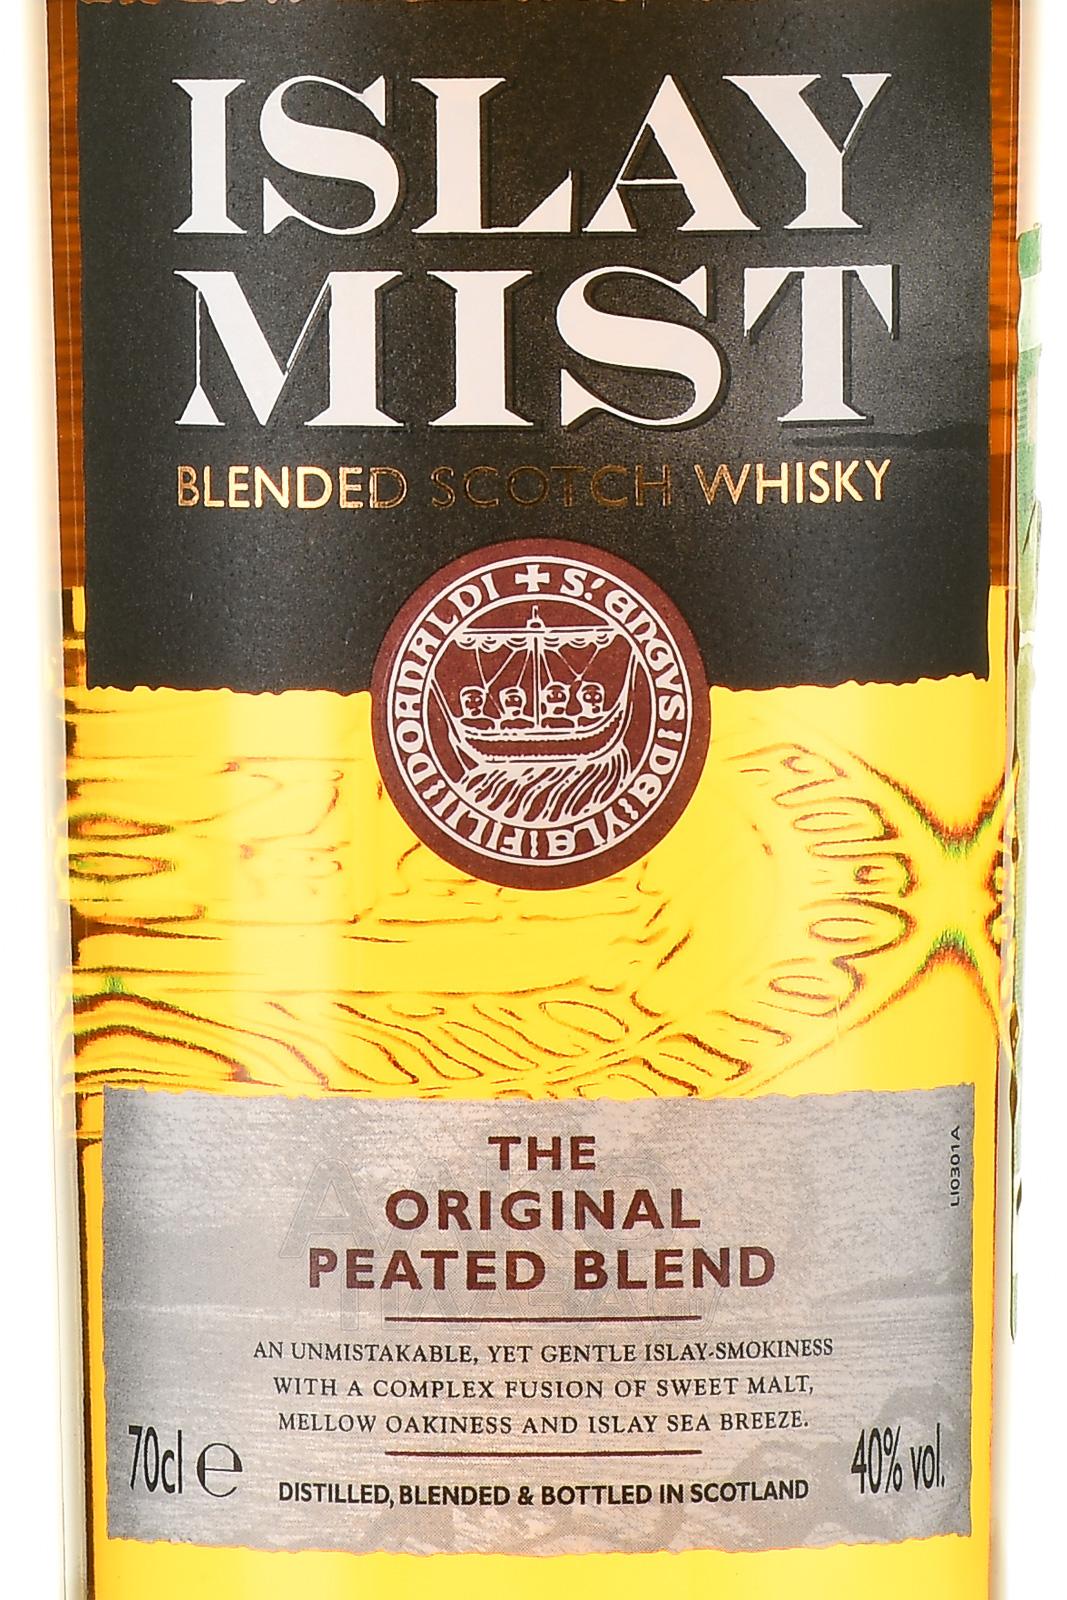 Mist 0.7. Айла мист виски 0.7. Виски Mist. Islay Mist виски. Highsl Mist виски.